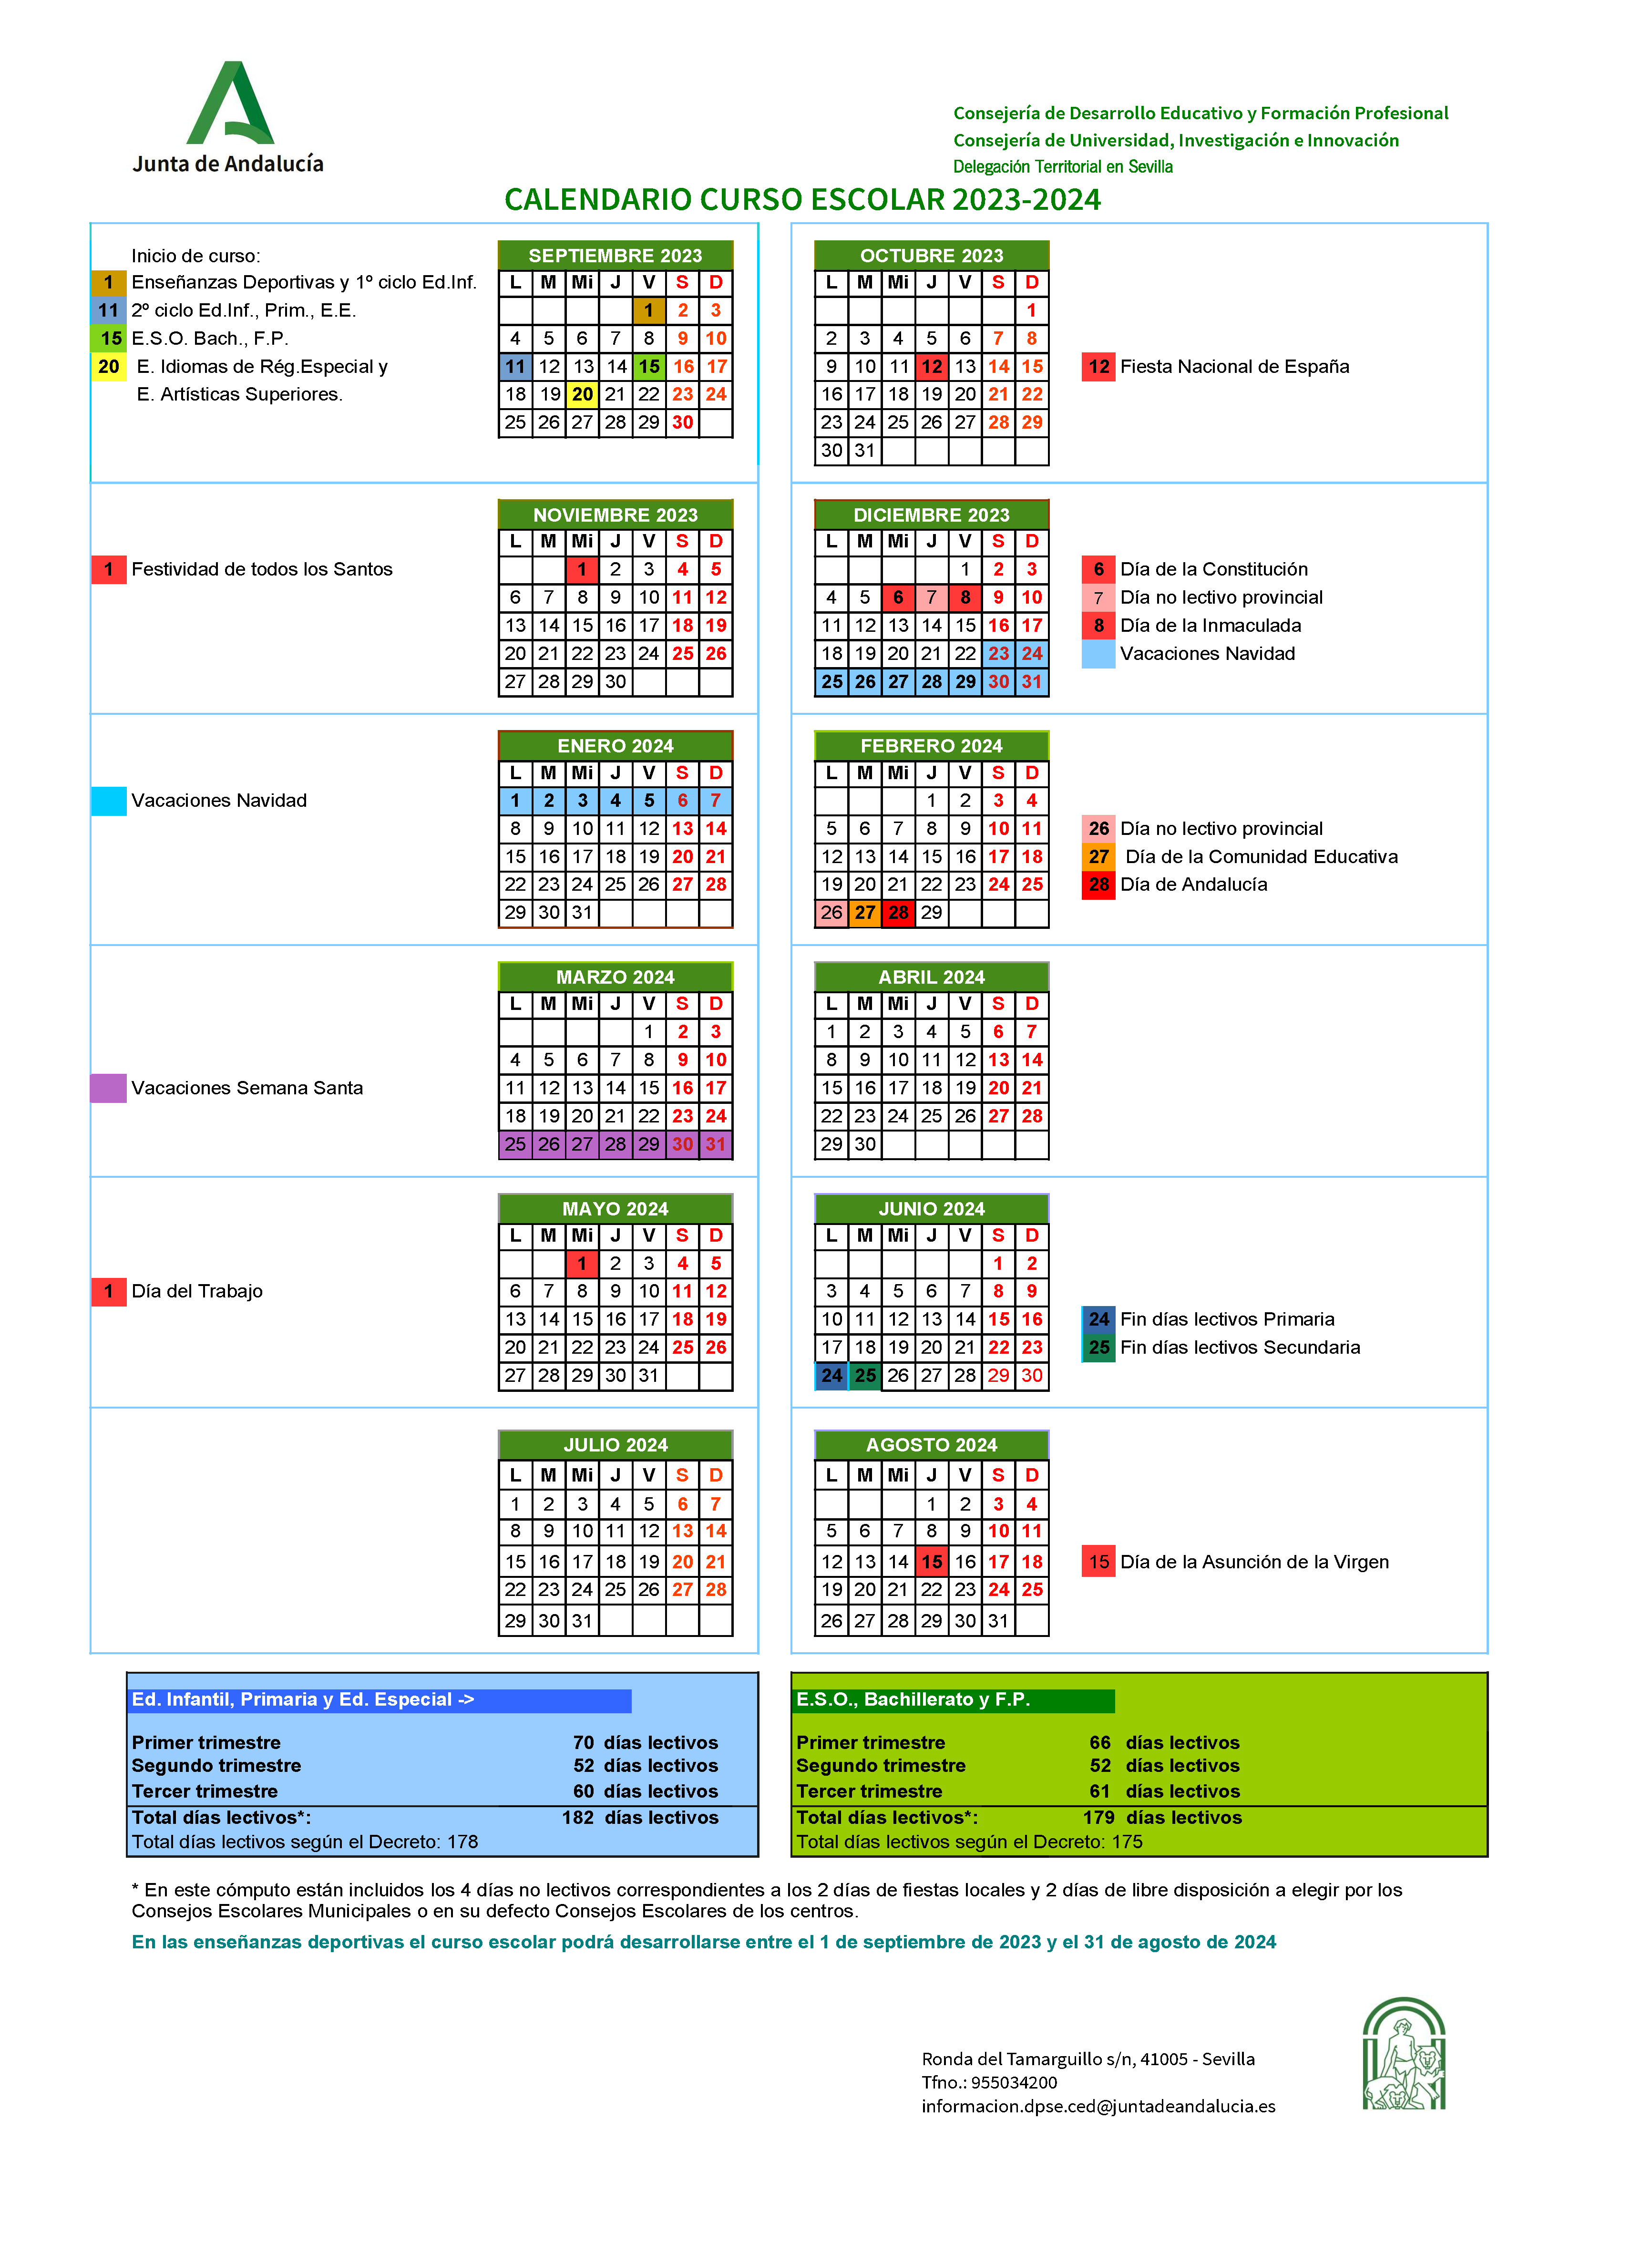 Calendario escolar de la Provincia de Sevilla